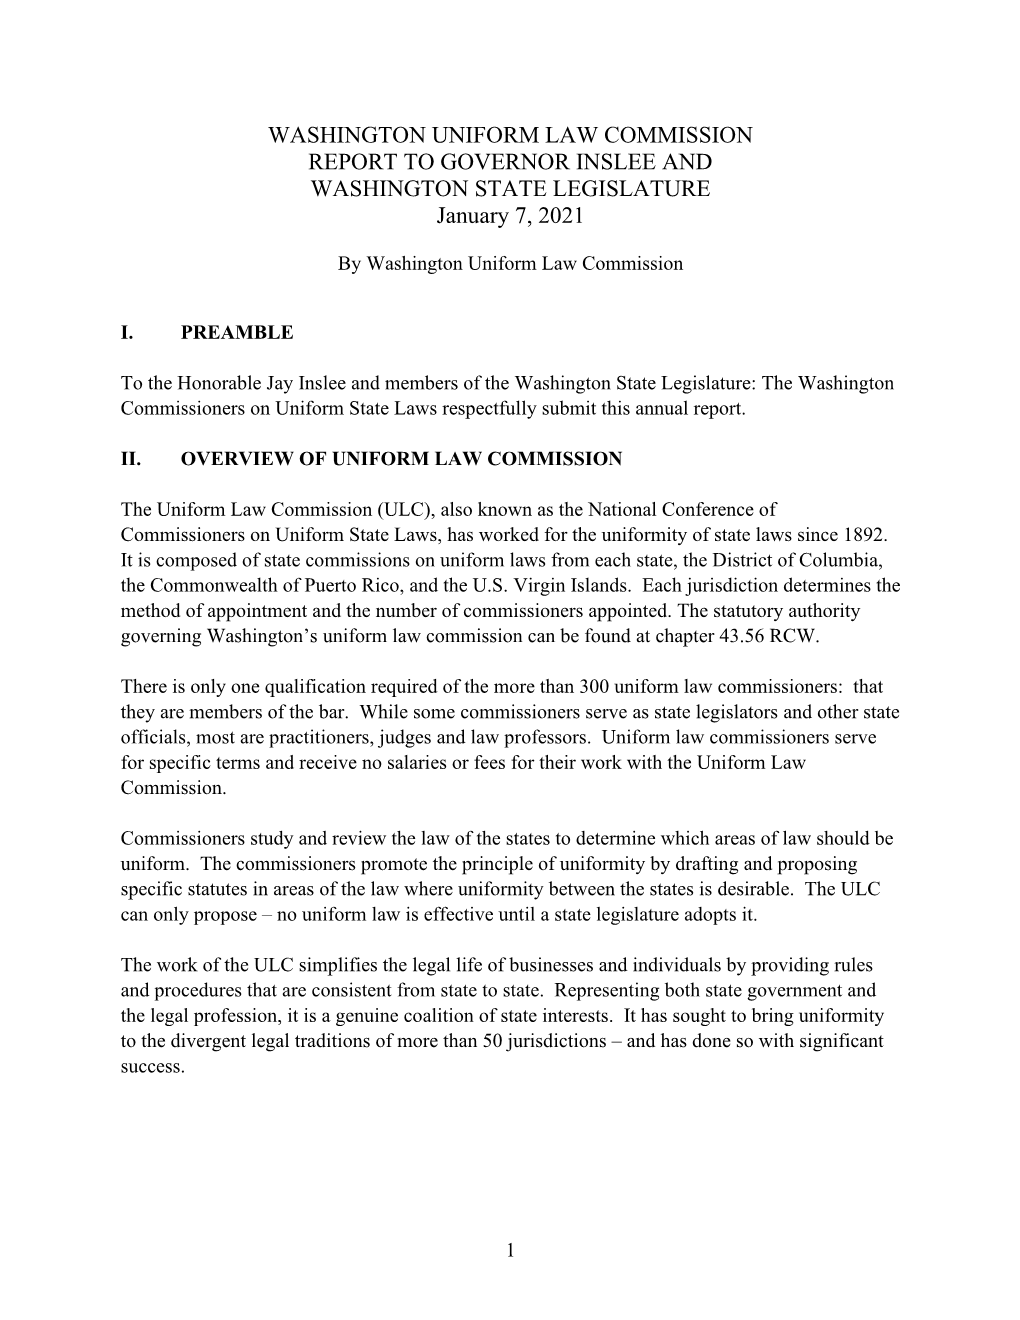 WASHINGTON UNIFORM LAW COMMISSION REPORT to GOVERNOR INSLEE and WASHINGTON STATE LEGISLATURE January 7, 2021